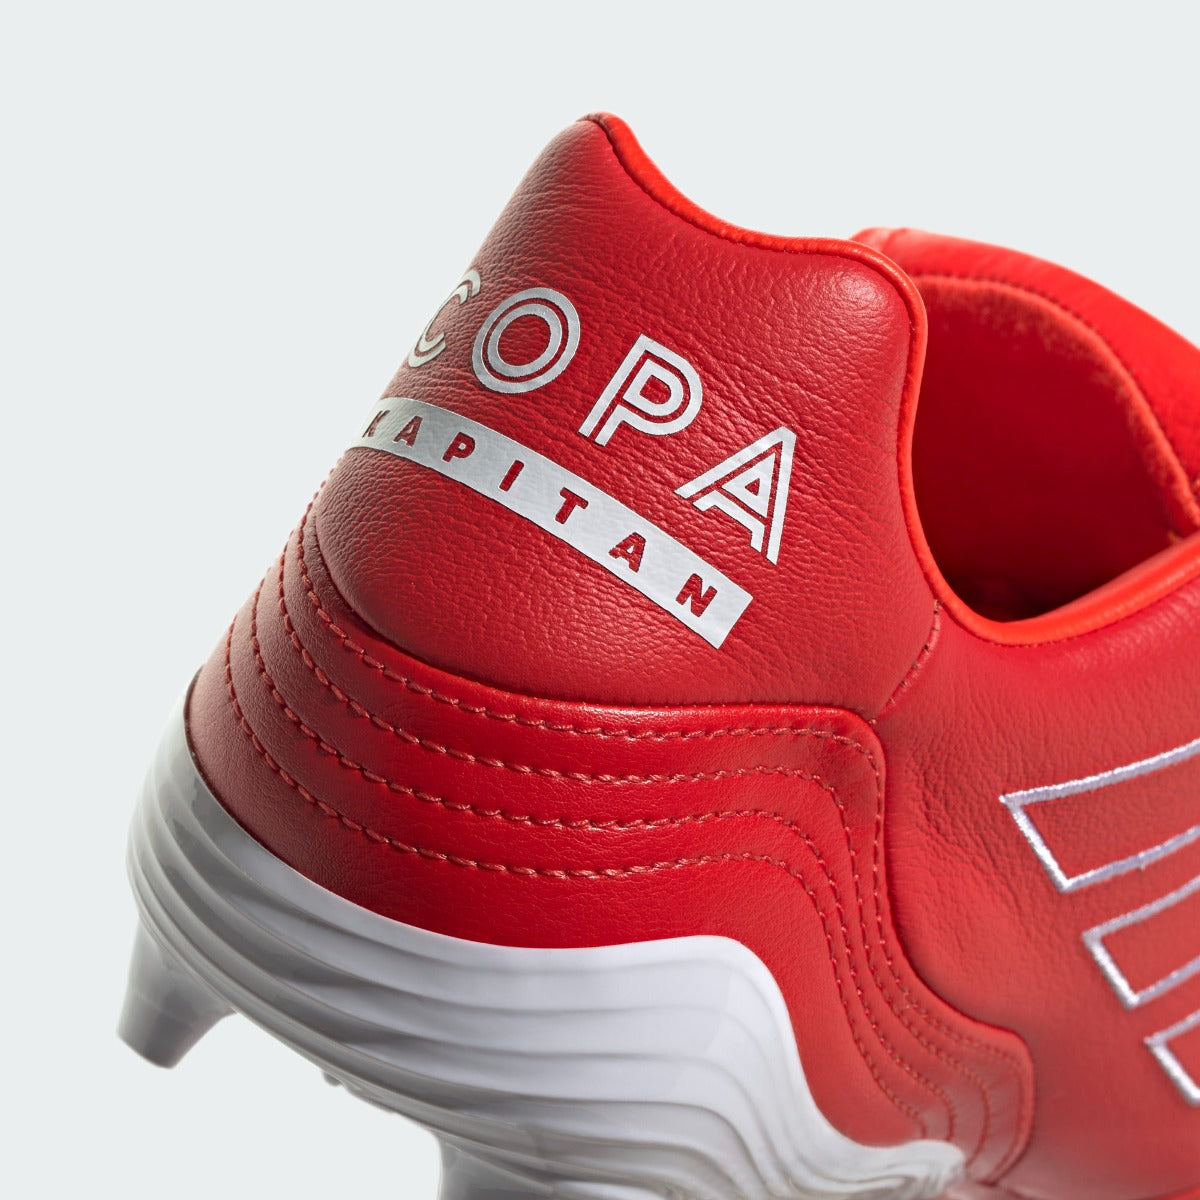 Adidas Copa Kapitan .2 FG - Red-White (Detail 2)